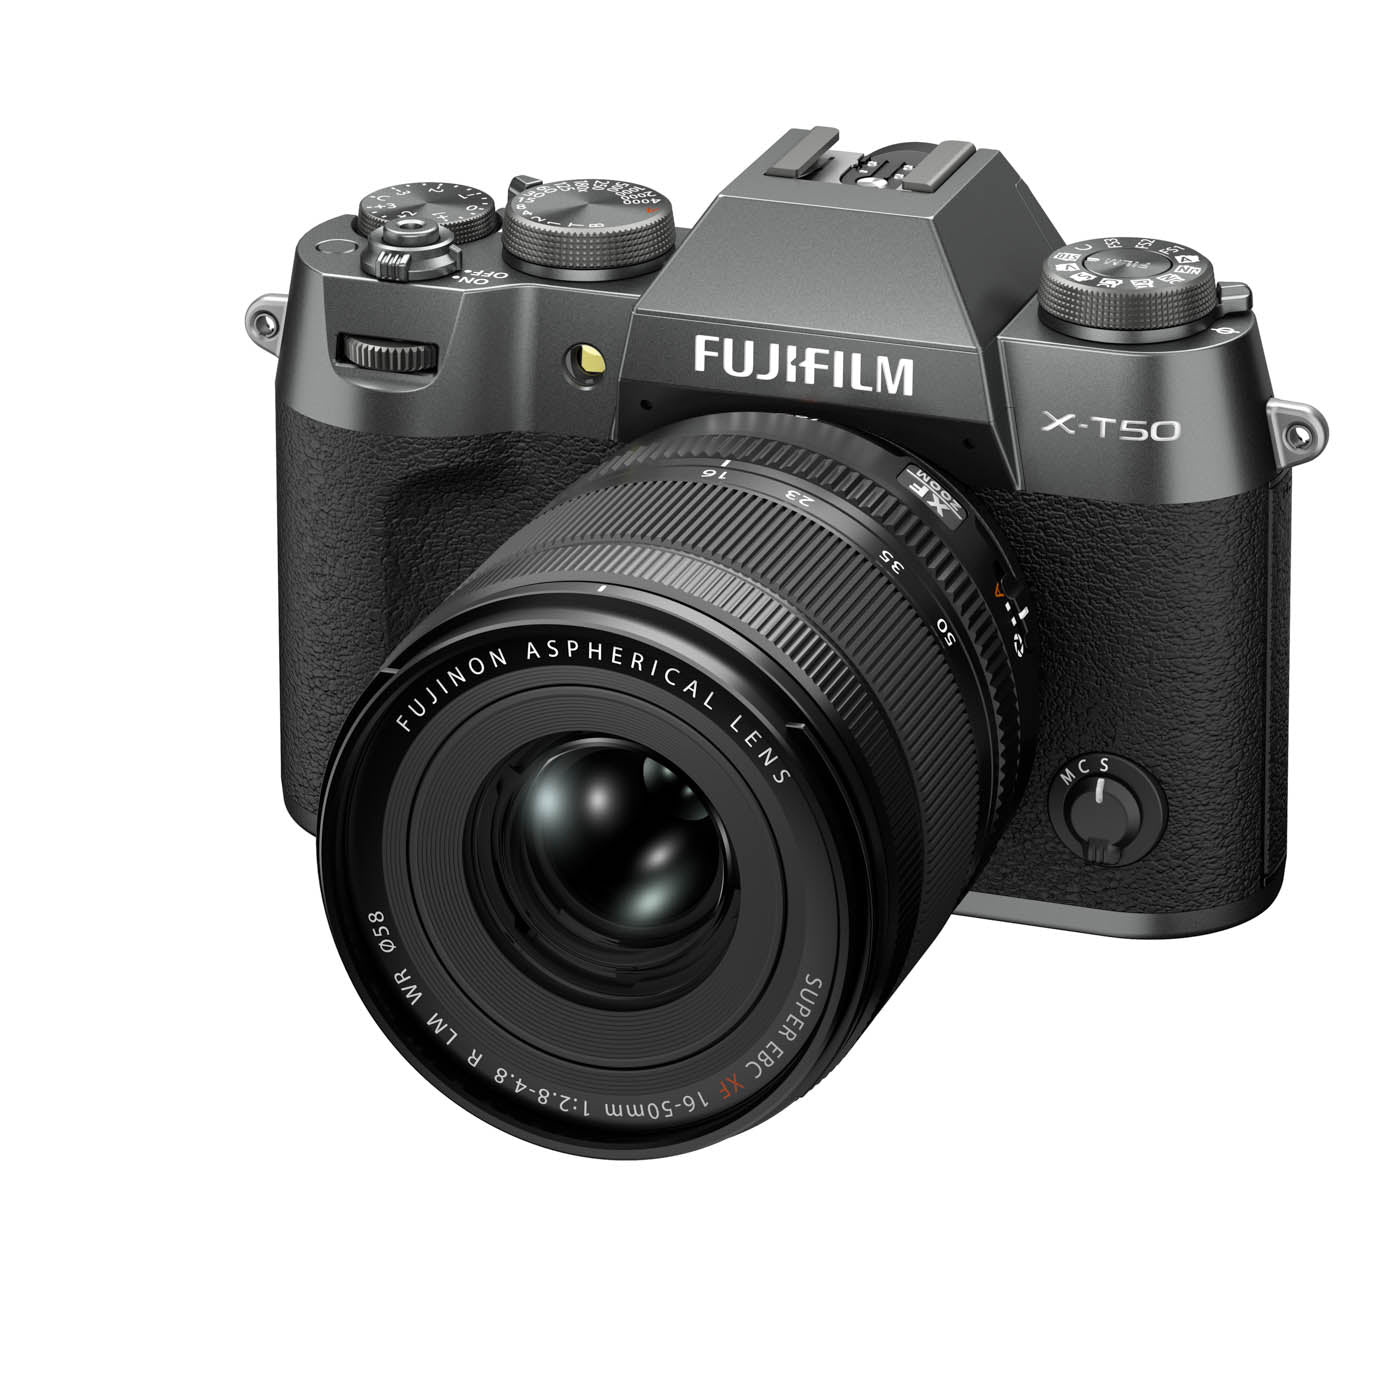 Fujifilm X-T50 Camera with XF 16-50mm F2.8-4.8 R LM WR Lens - Charcoal Silver